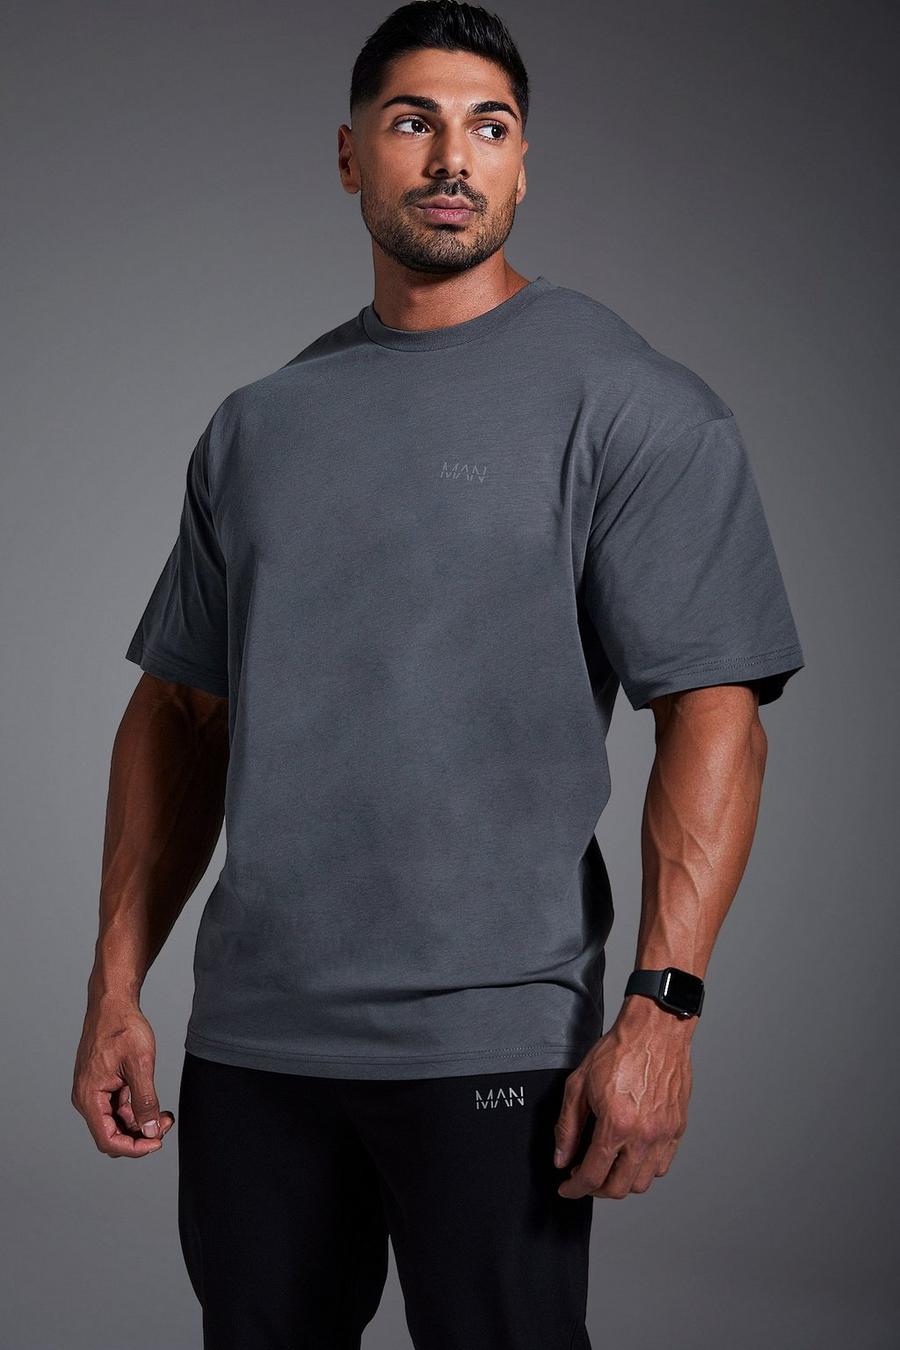 MAN Active x Andrei - T-shirt oversize, Charcoal grey